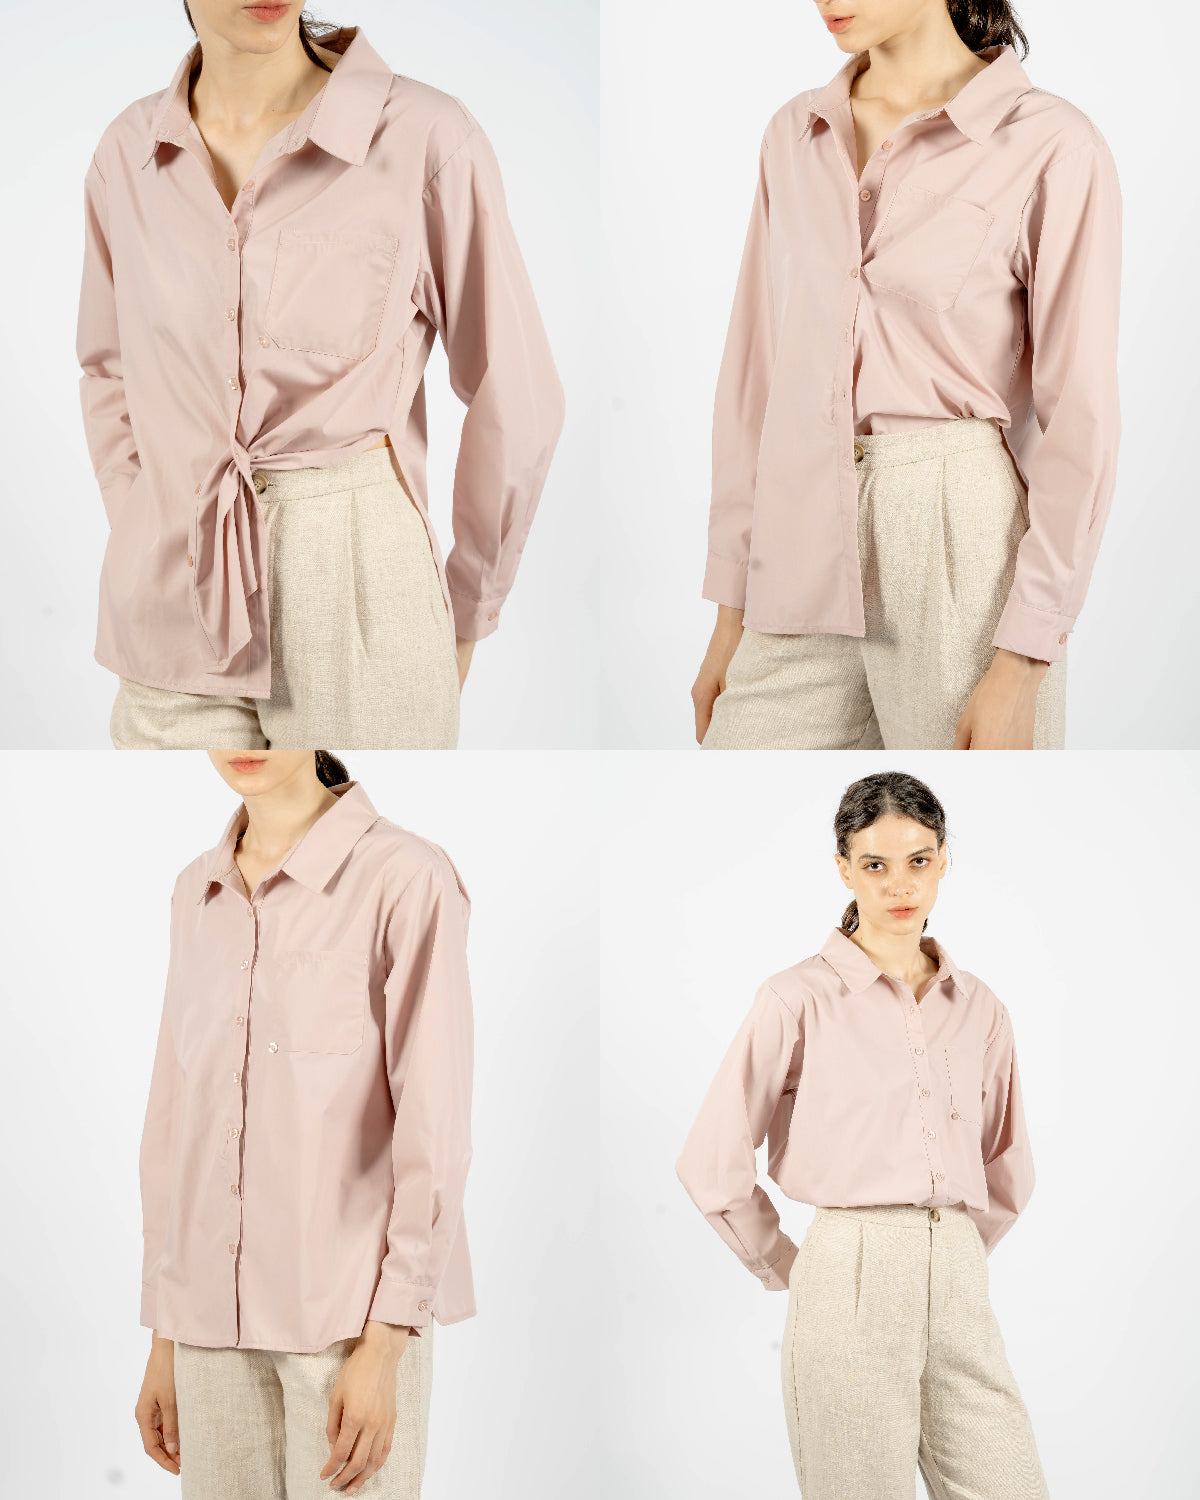 Ava Multi-Wear Shirt (Pink)